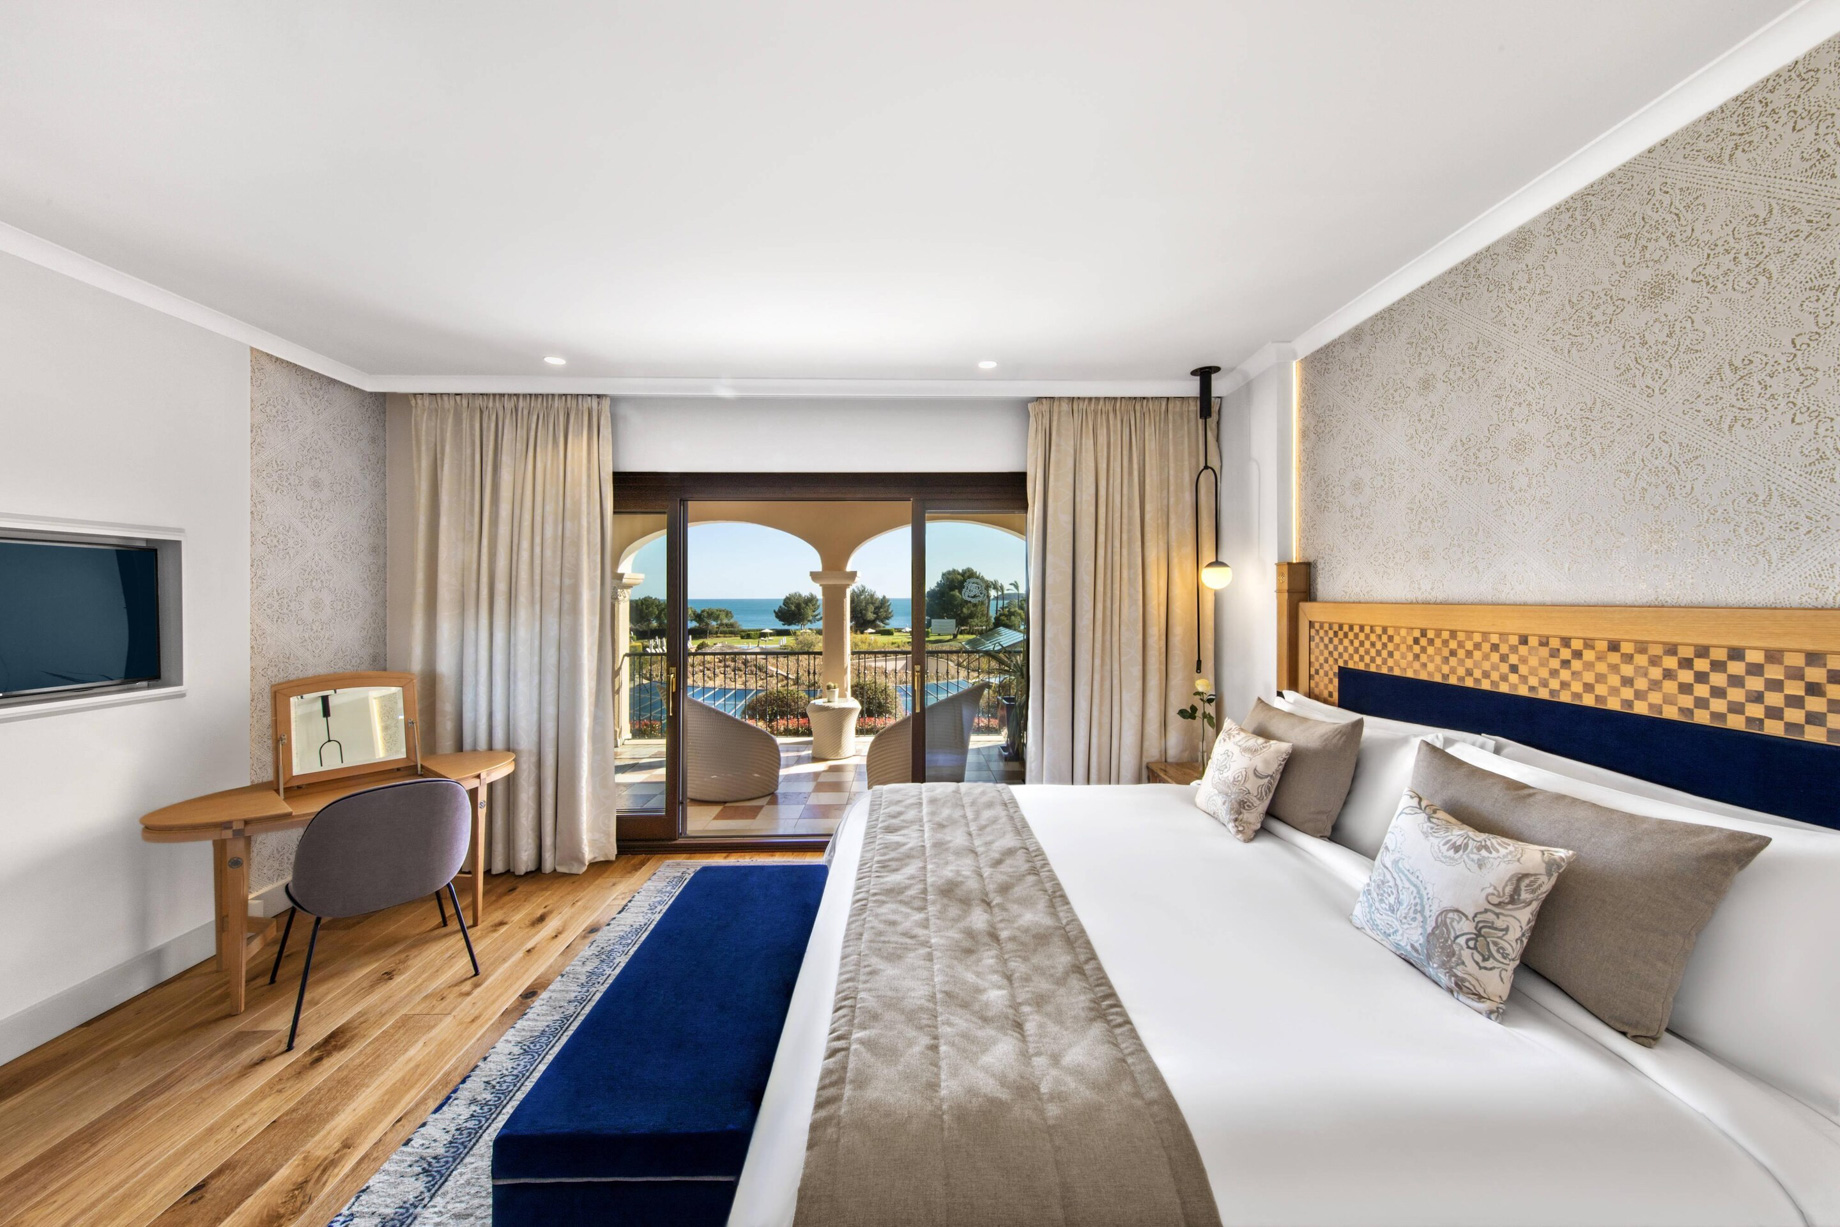 The St. Regis Mardavall Mallorca Resort – Palma de Mallorca, Spain – Ocean One Suite Bedroom Decor